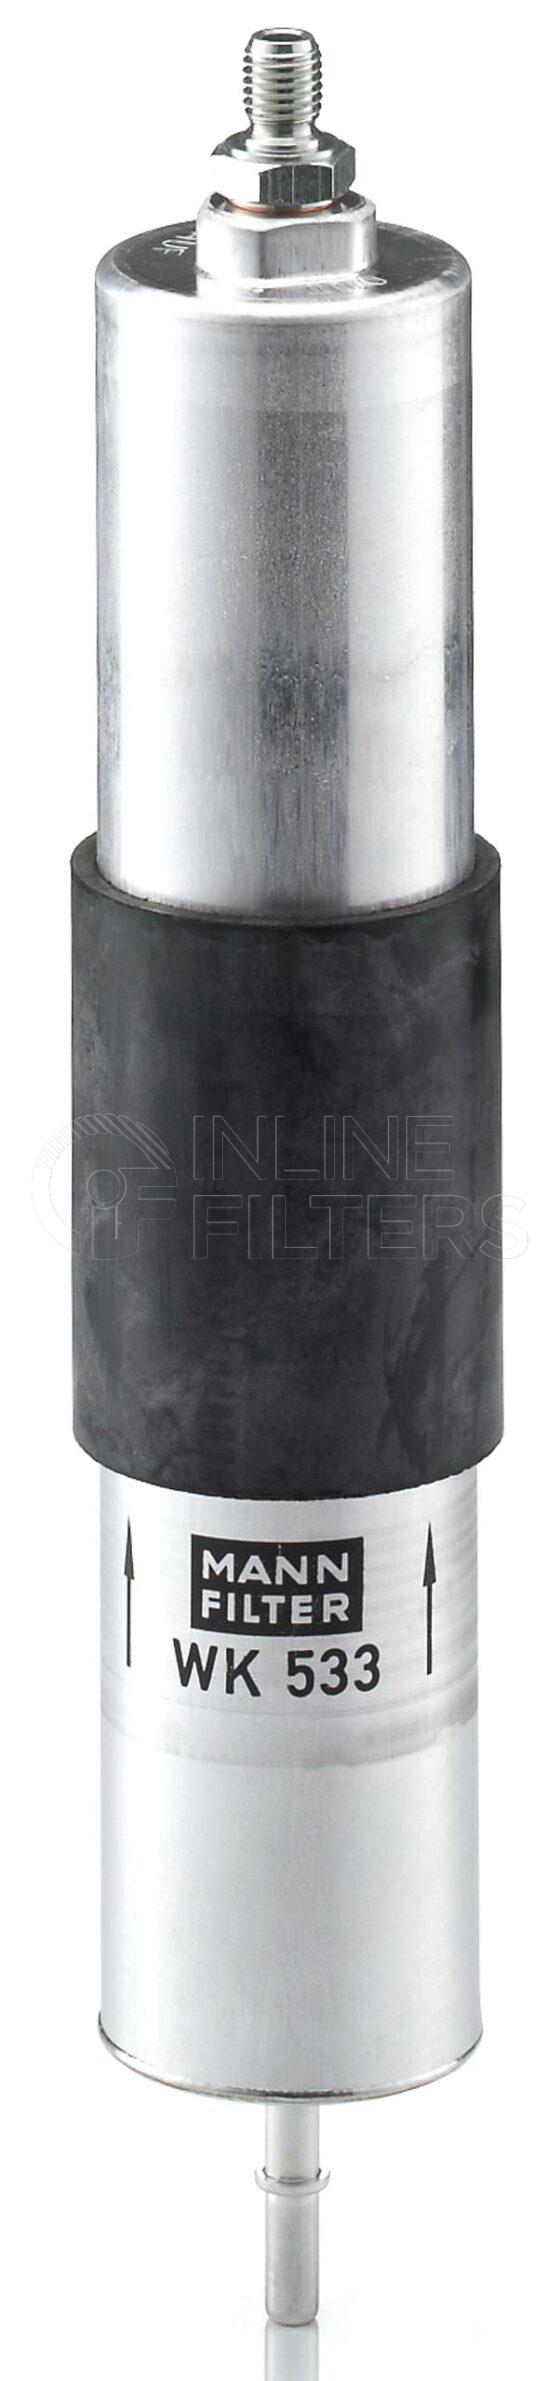 Mann WK 533. Filter Type: Fuel.